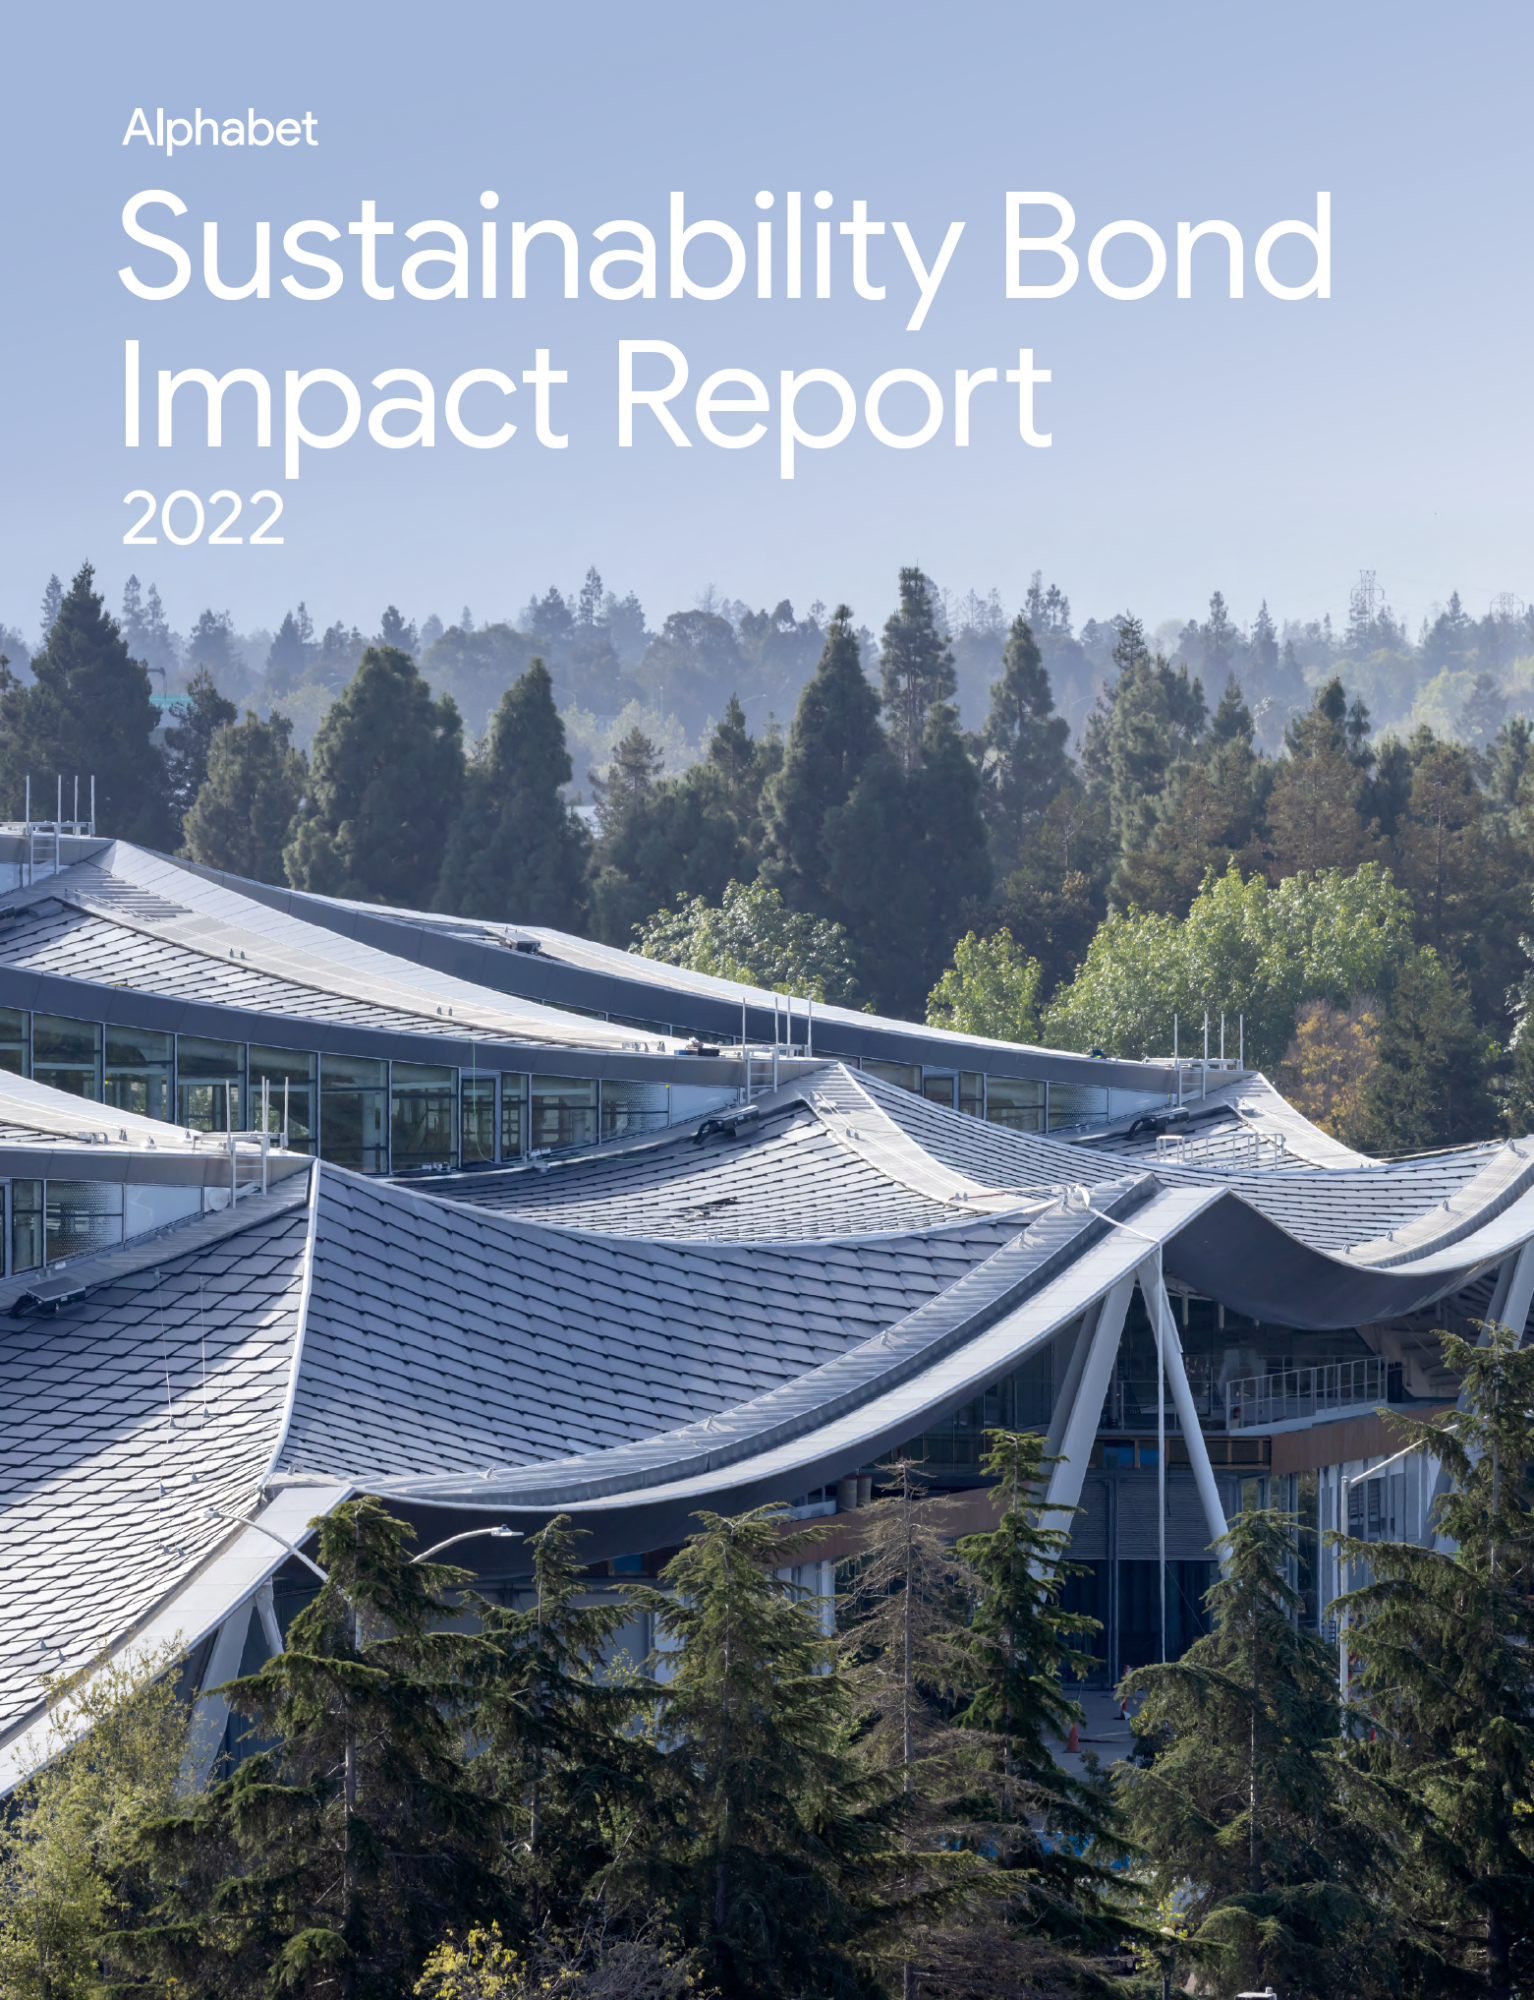 Alphabet's Sustainability Bond Impact Report 2022